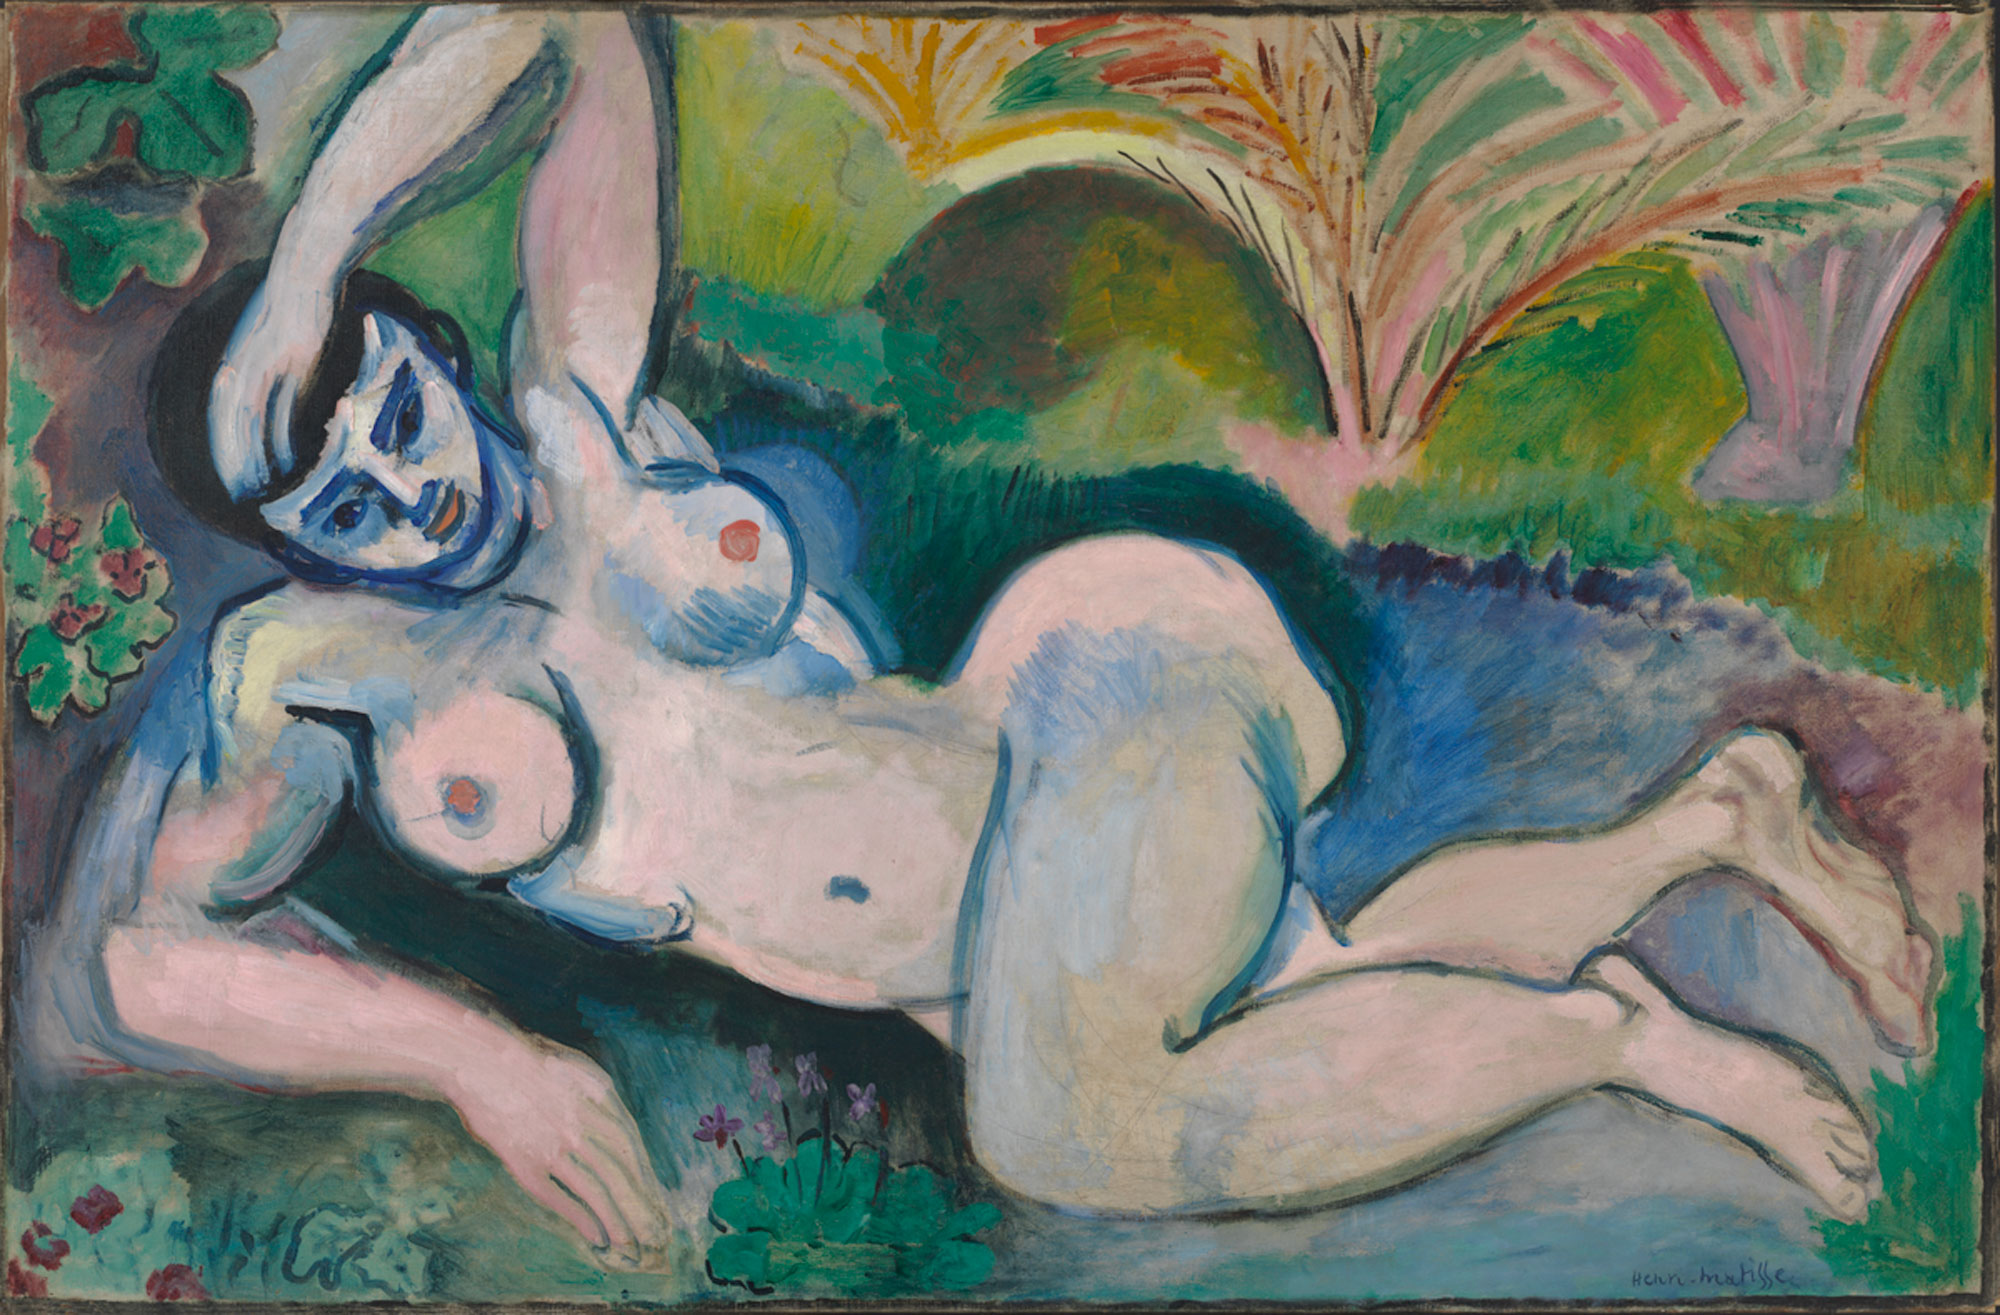 Henri Matisse, Blue Nude (Memory of Biskra), 1907, oil on canvas, 92.1 x 140.3 cm (Baltimore Museum of Art)